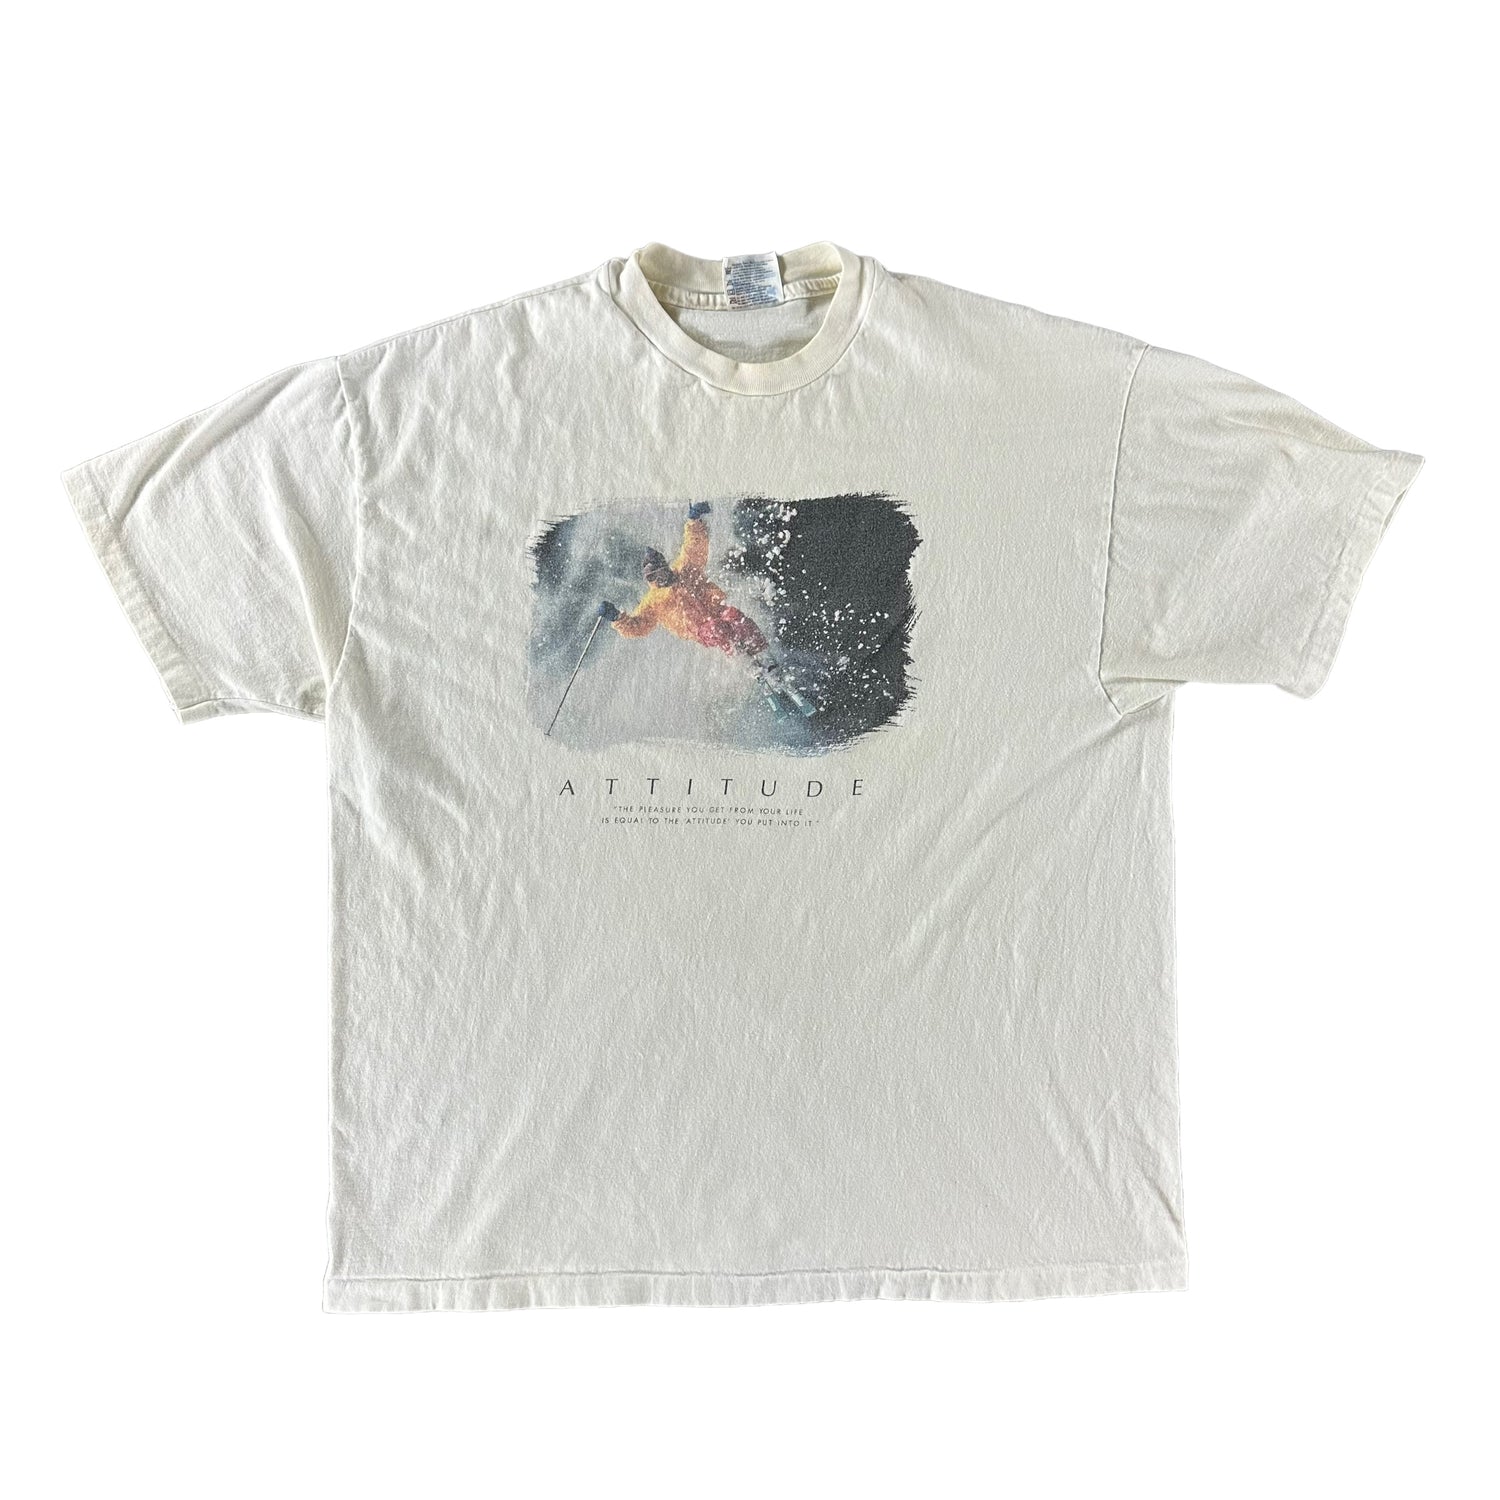 Vintage 1990s Inspiration T-shirt size XL